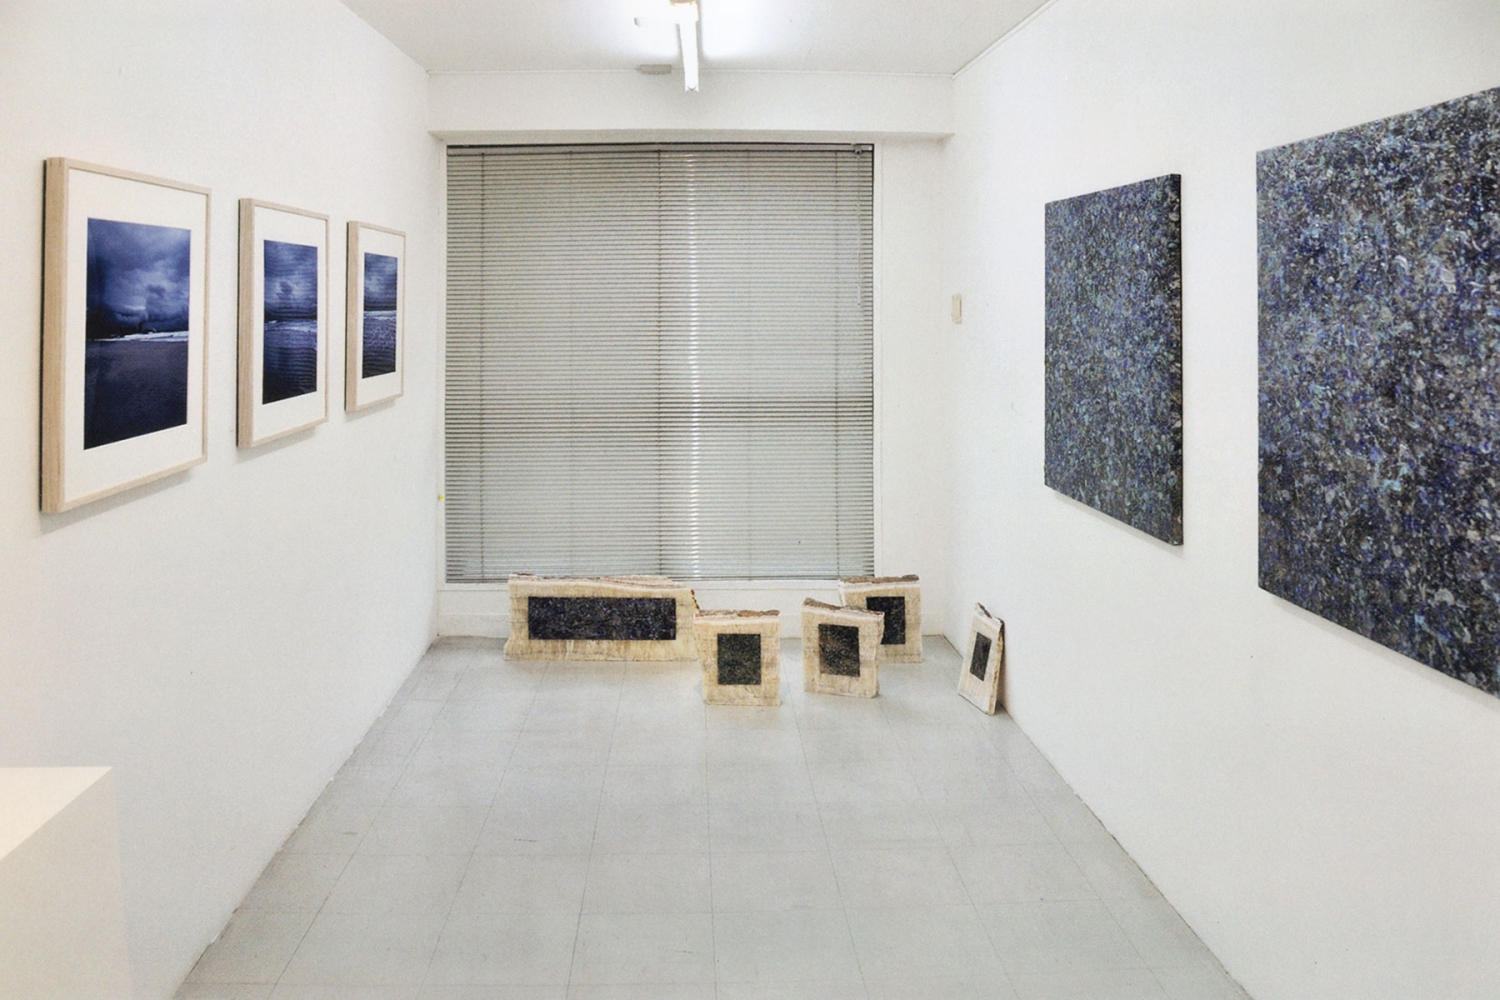 Tokyo Gallery, 2009